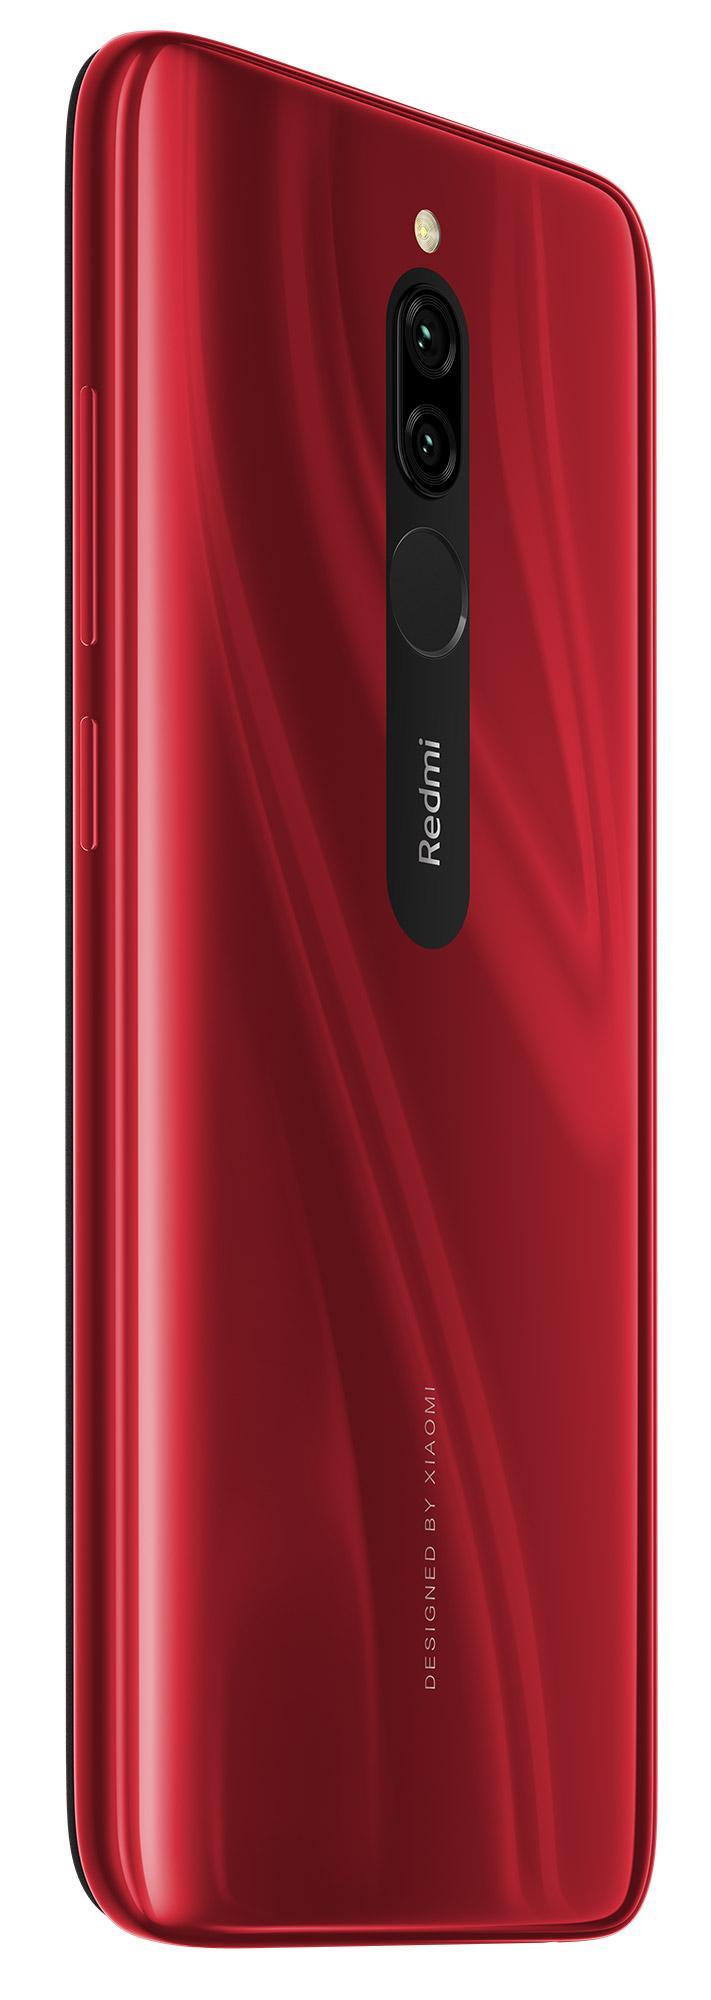 Купить Смартфон Xiaomi Redmi 8 3/32Gb Ruby Red